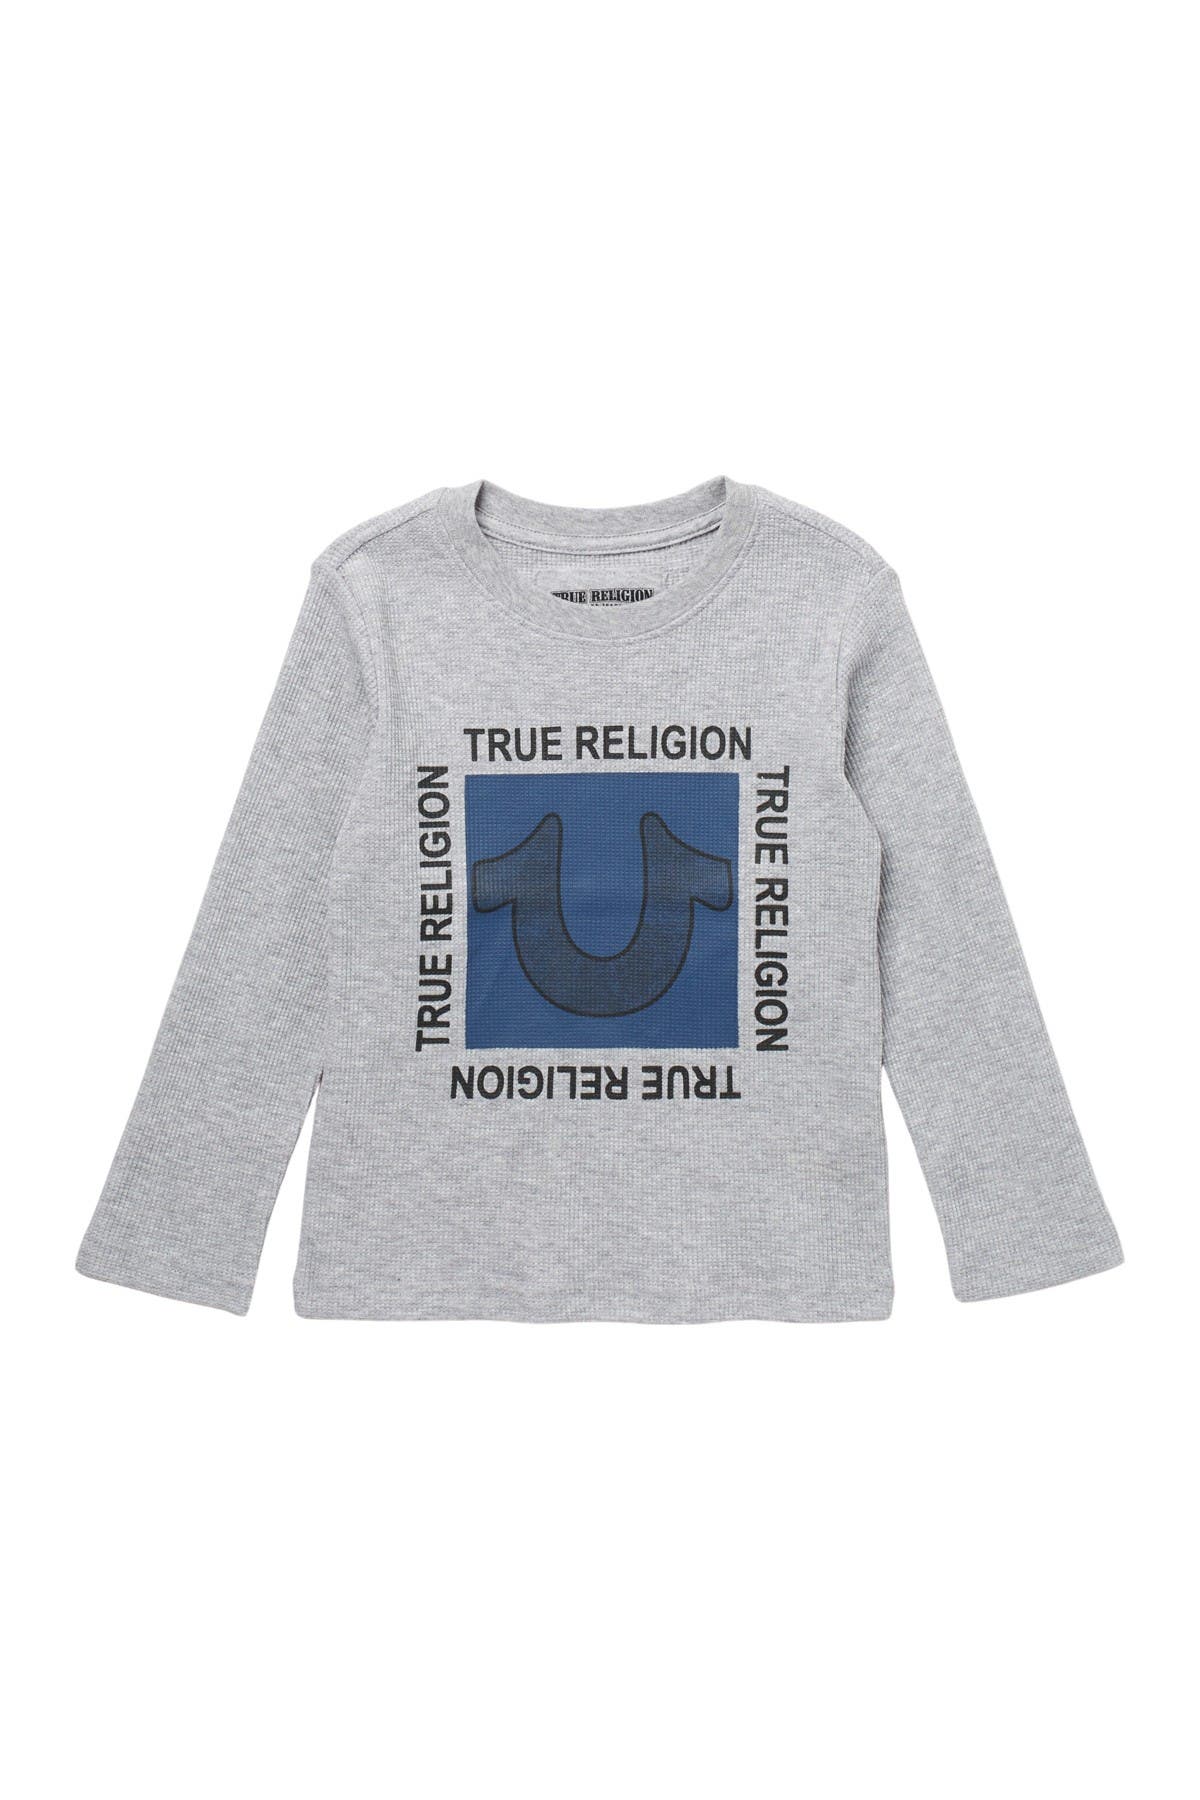 nordstrom rack true religion